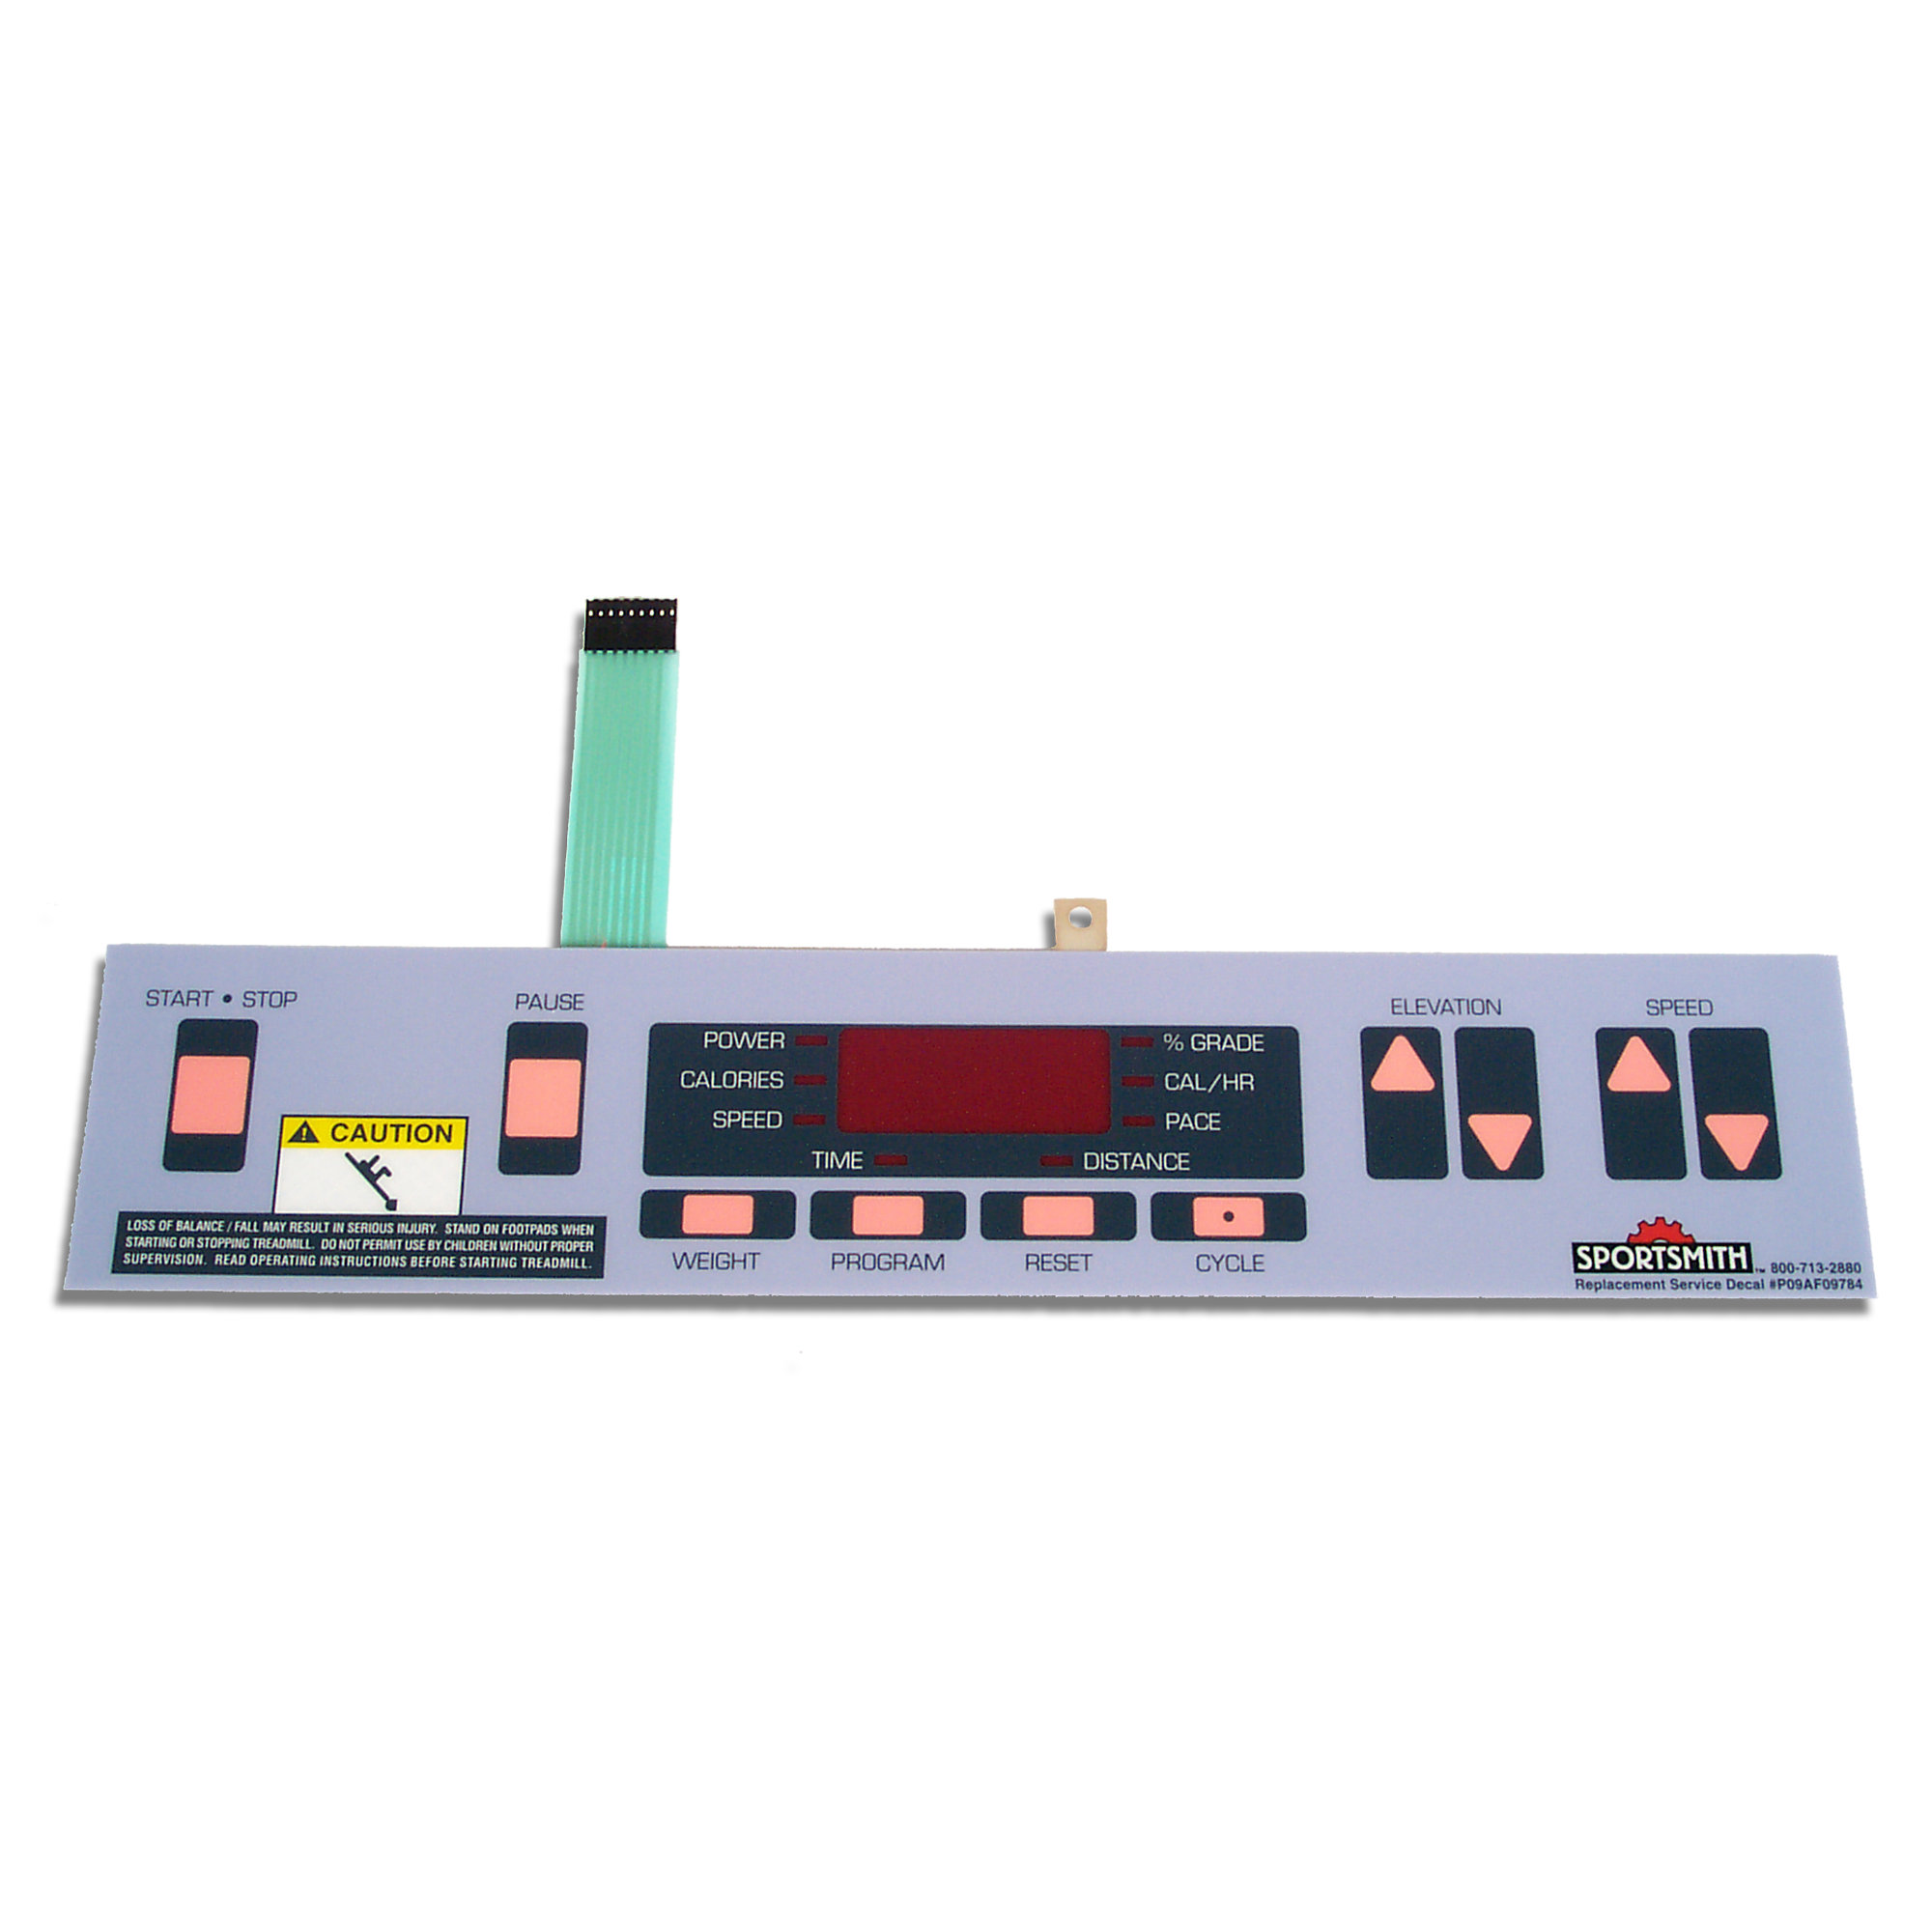 Overlay and Keypad, Trotter/Cybex 540ST Treadmill